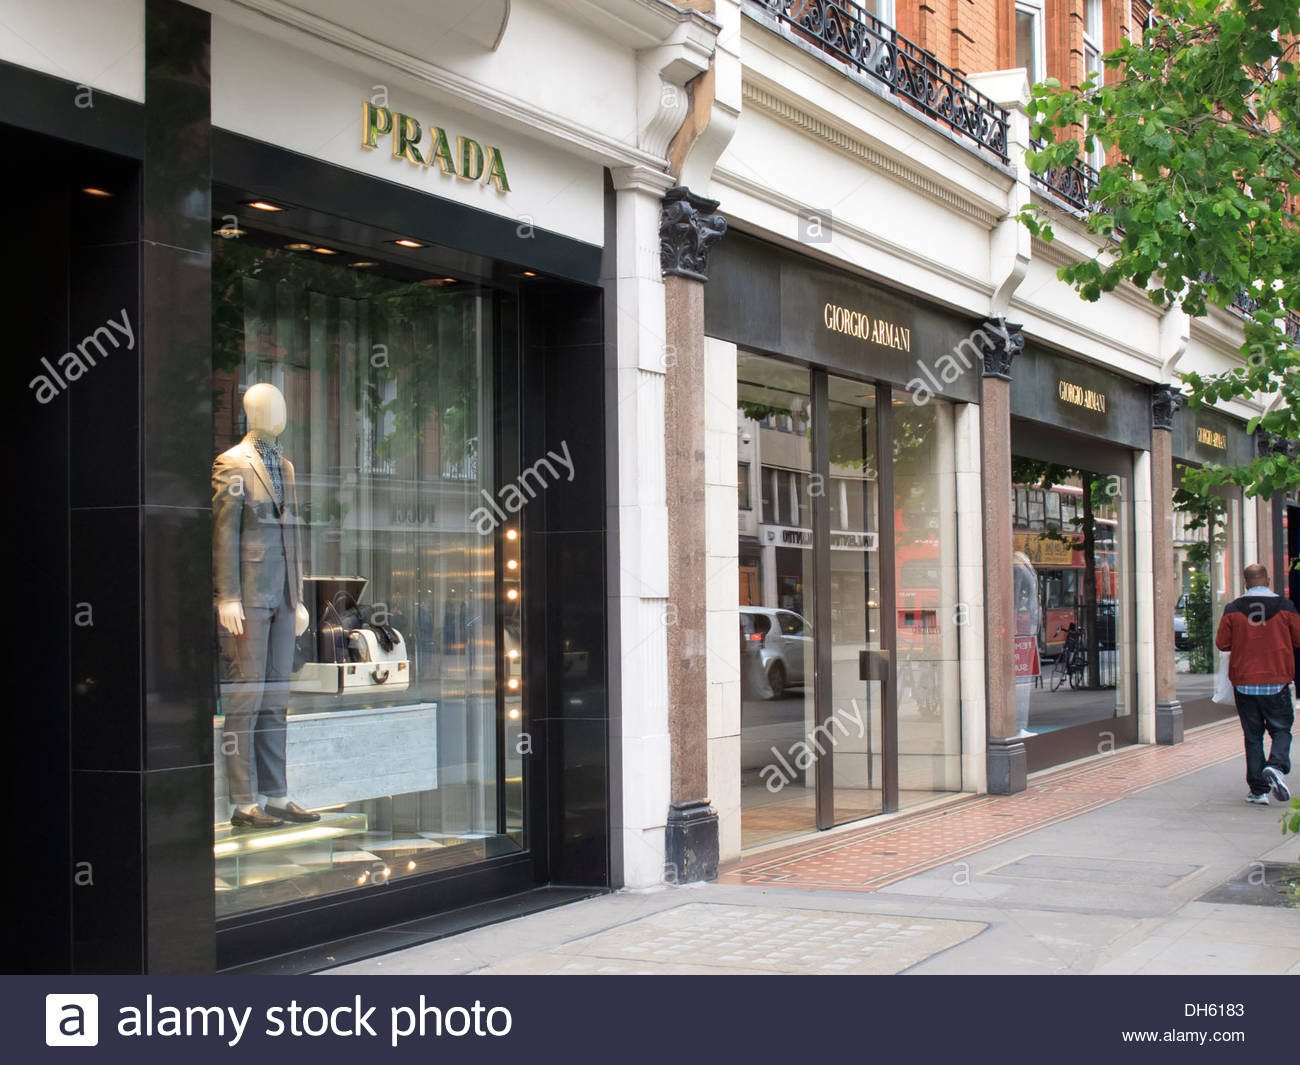 Prada Sloane Street London England 